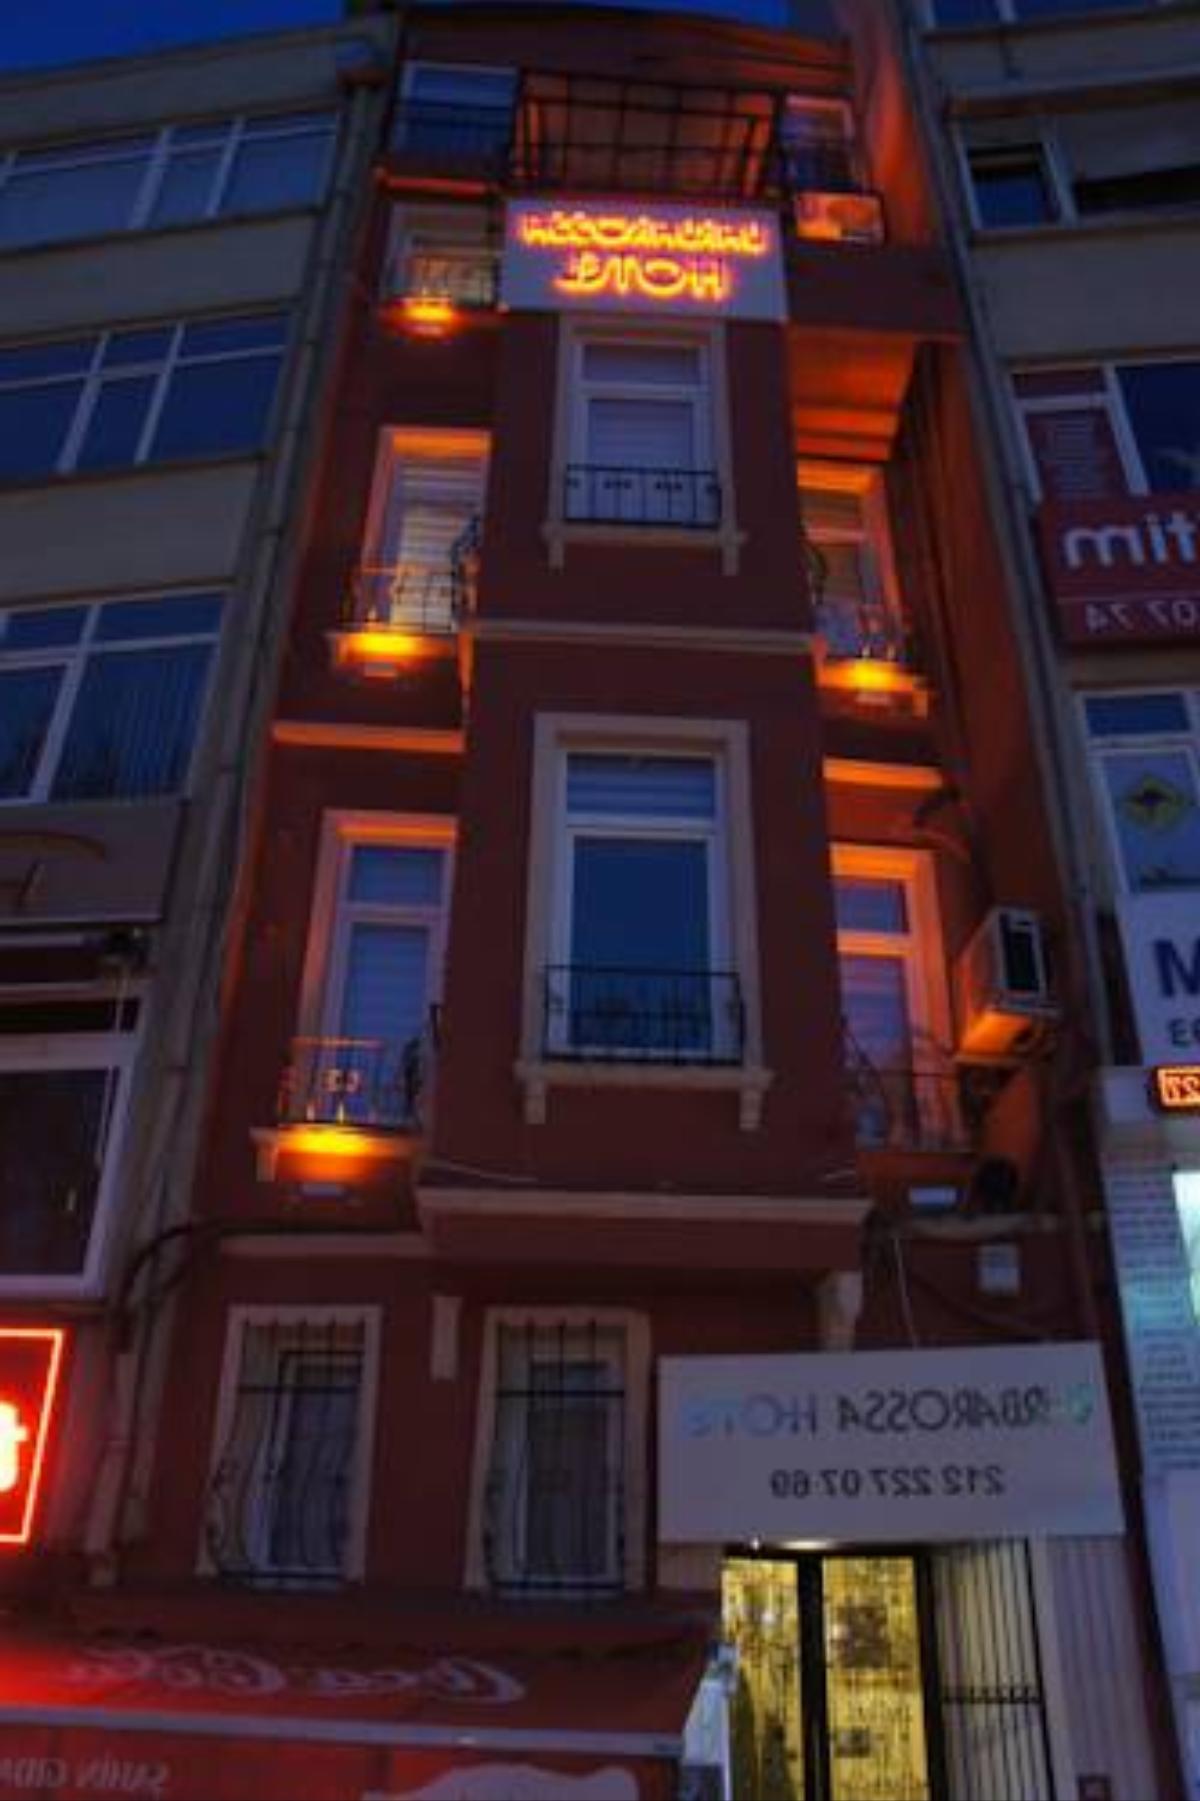 Barba Rossa Residence Hotel İstanbul Turkey